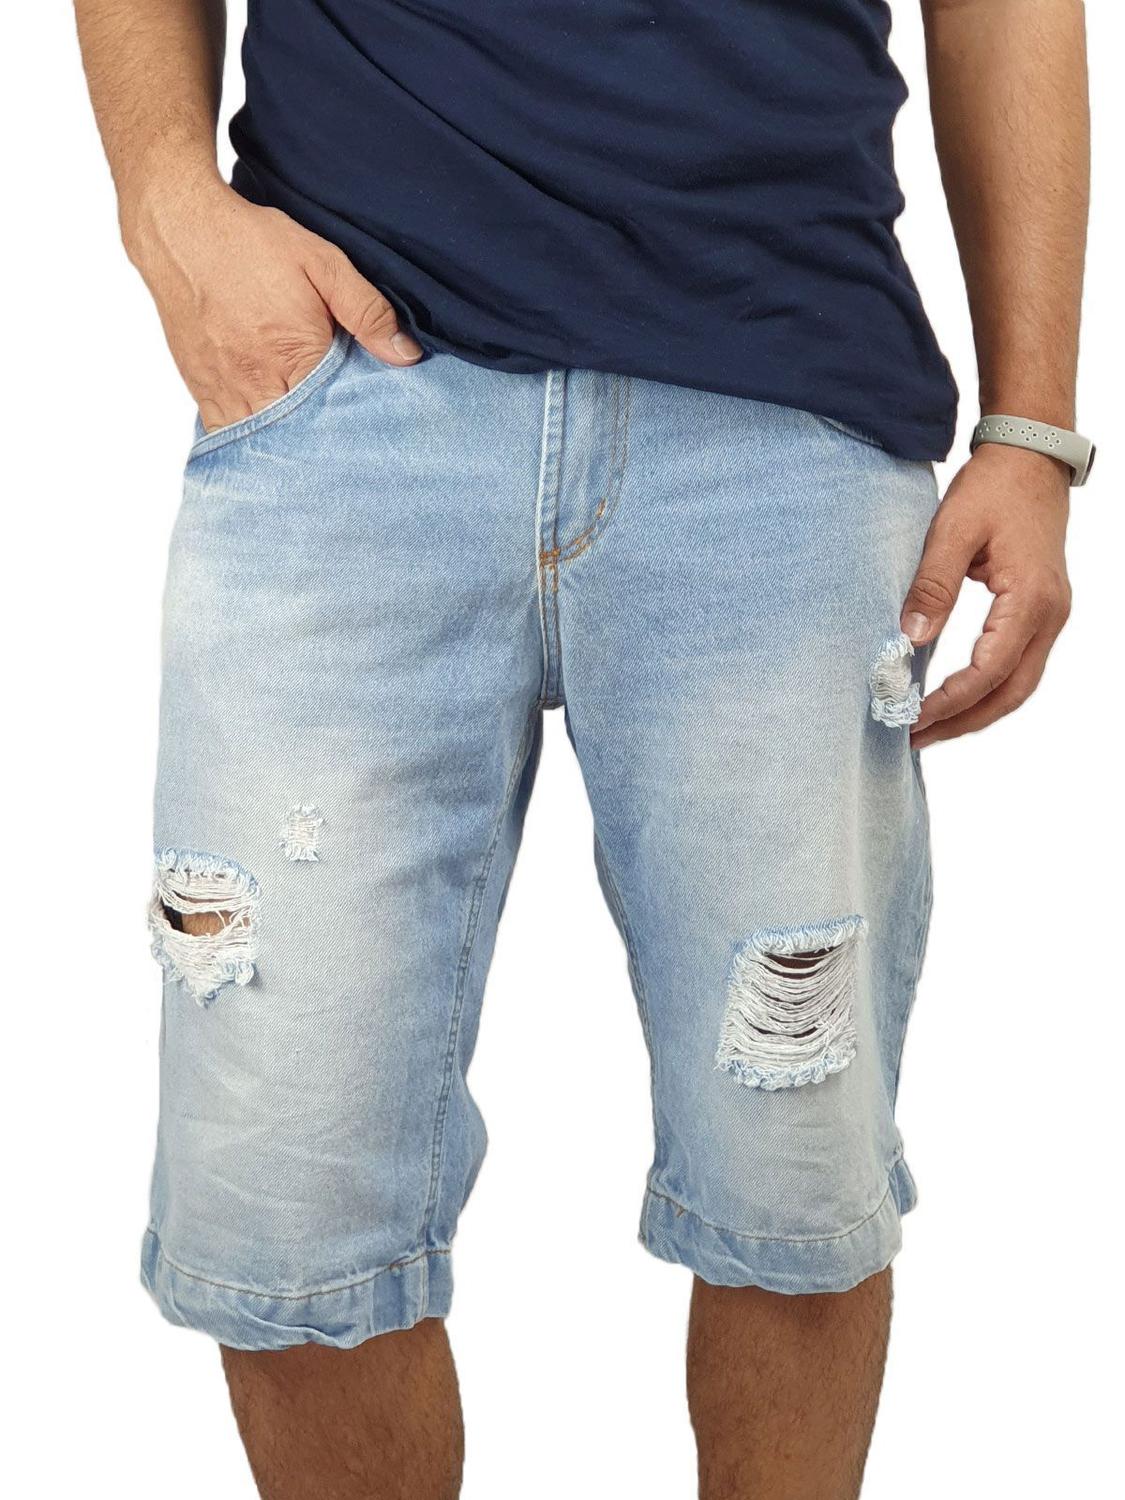 bermudas masculinas jeans rasgado